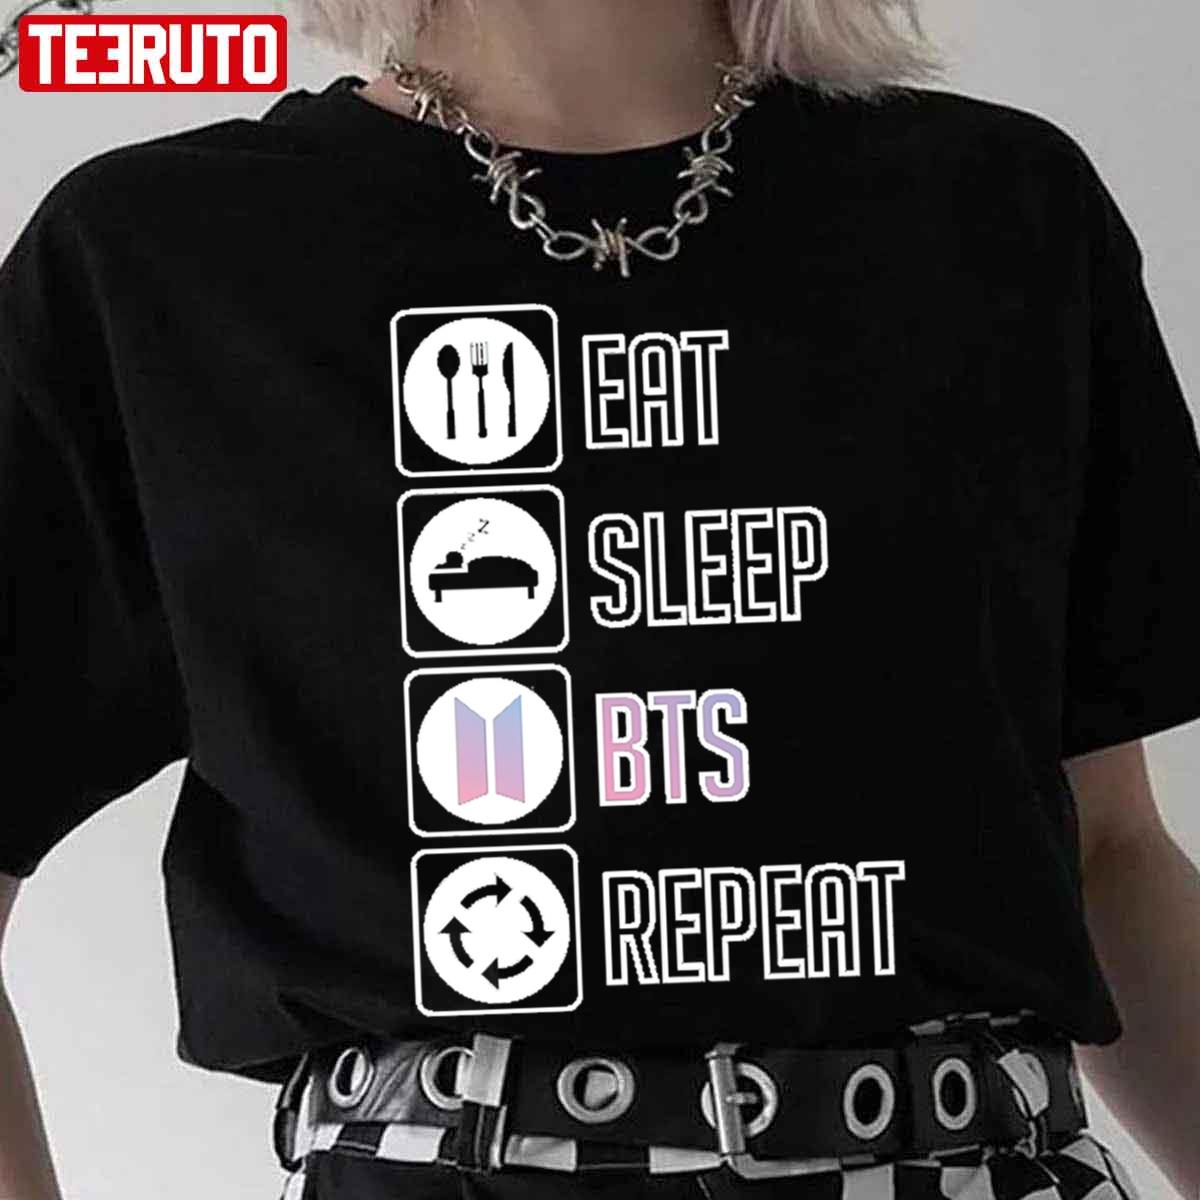 Eat Sleep BTS Repeat Unisex T-Shirt